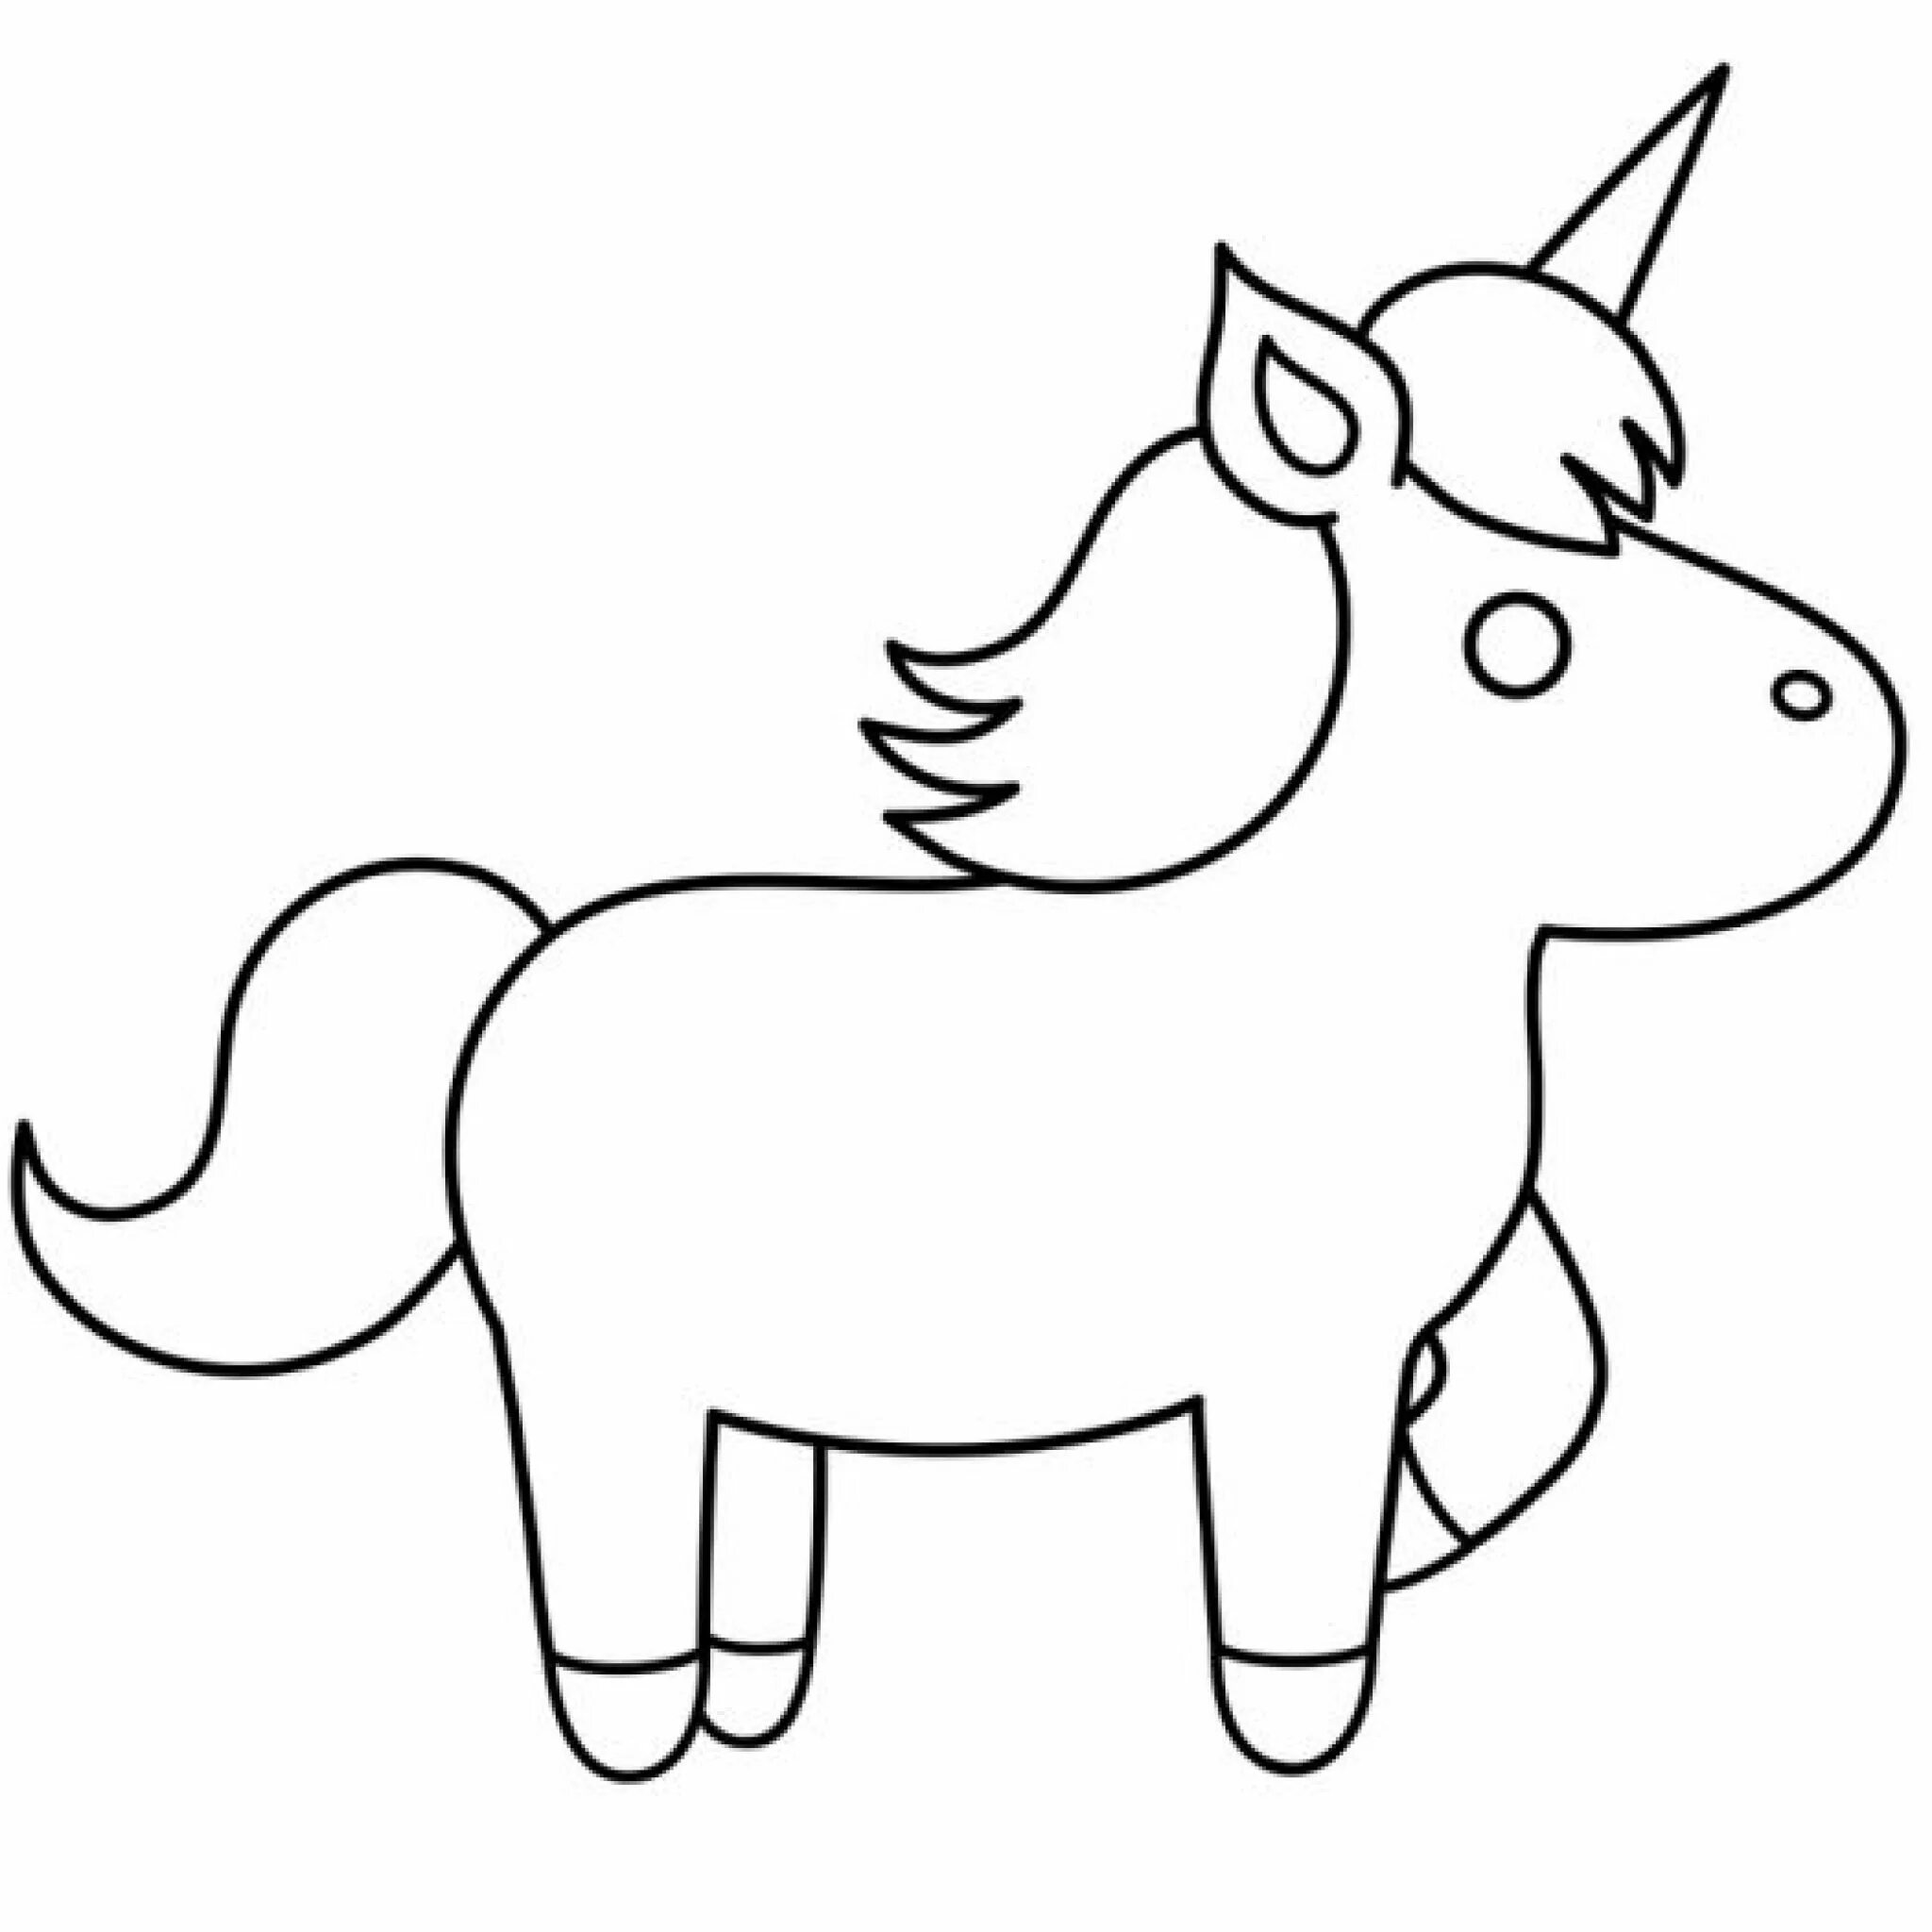 Extraordinary coloring simple unicorn